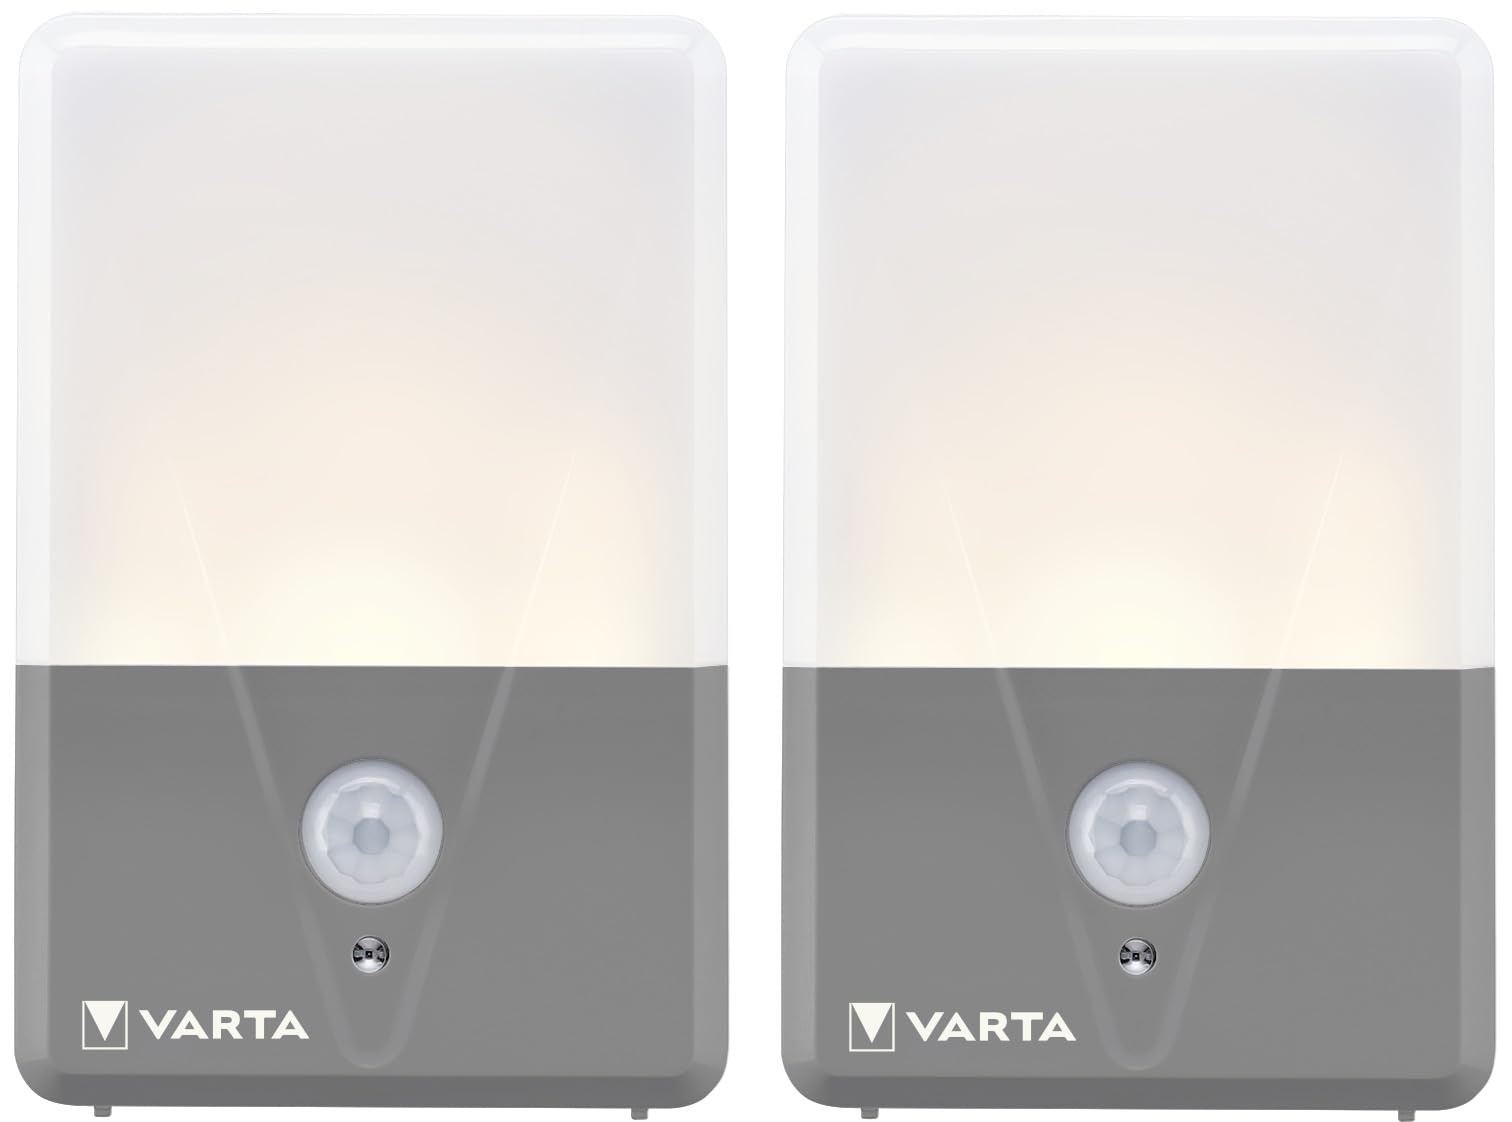 VARTA Nachtlicht mit Bewegungssensor LED, 2 Stück, unbestückt, Motion Sensor Outdoor Light Twin Pack, batteriebetrieben, Installation: Schraube, Magnet oder 3M-Klebeband, Spritzwassergeschützt, Weiß